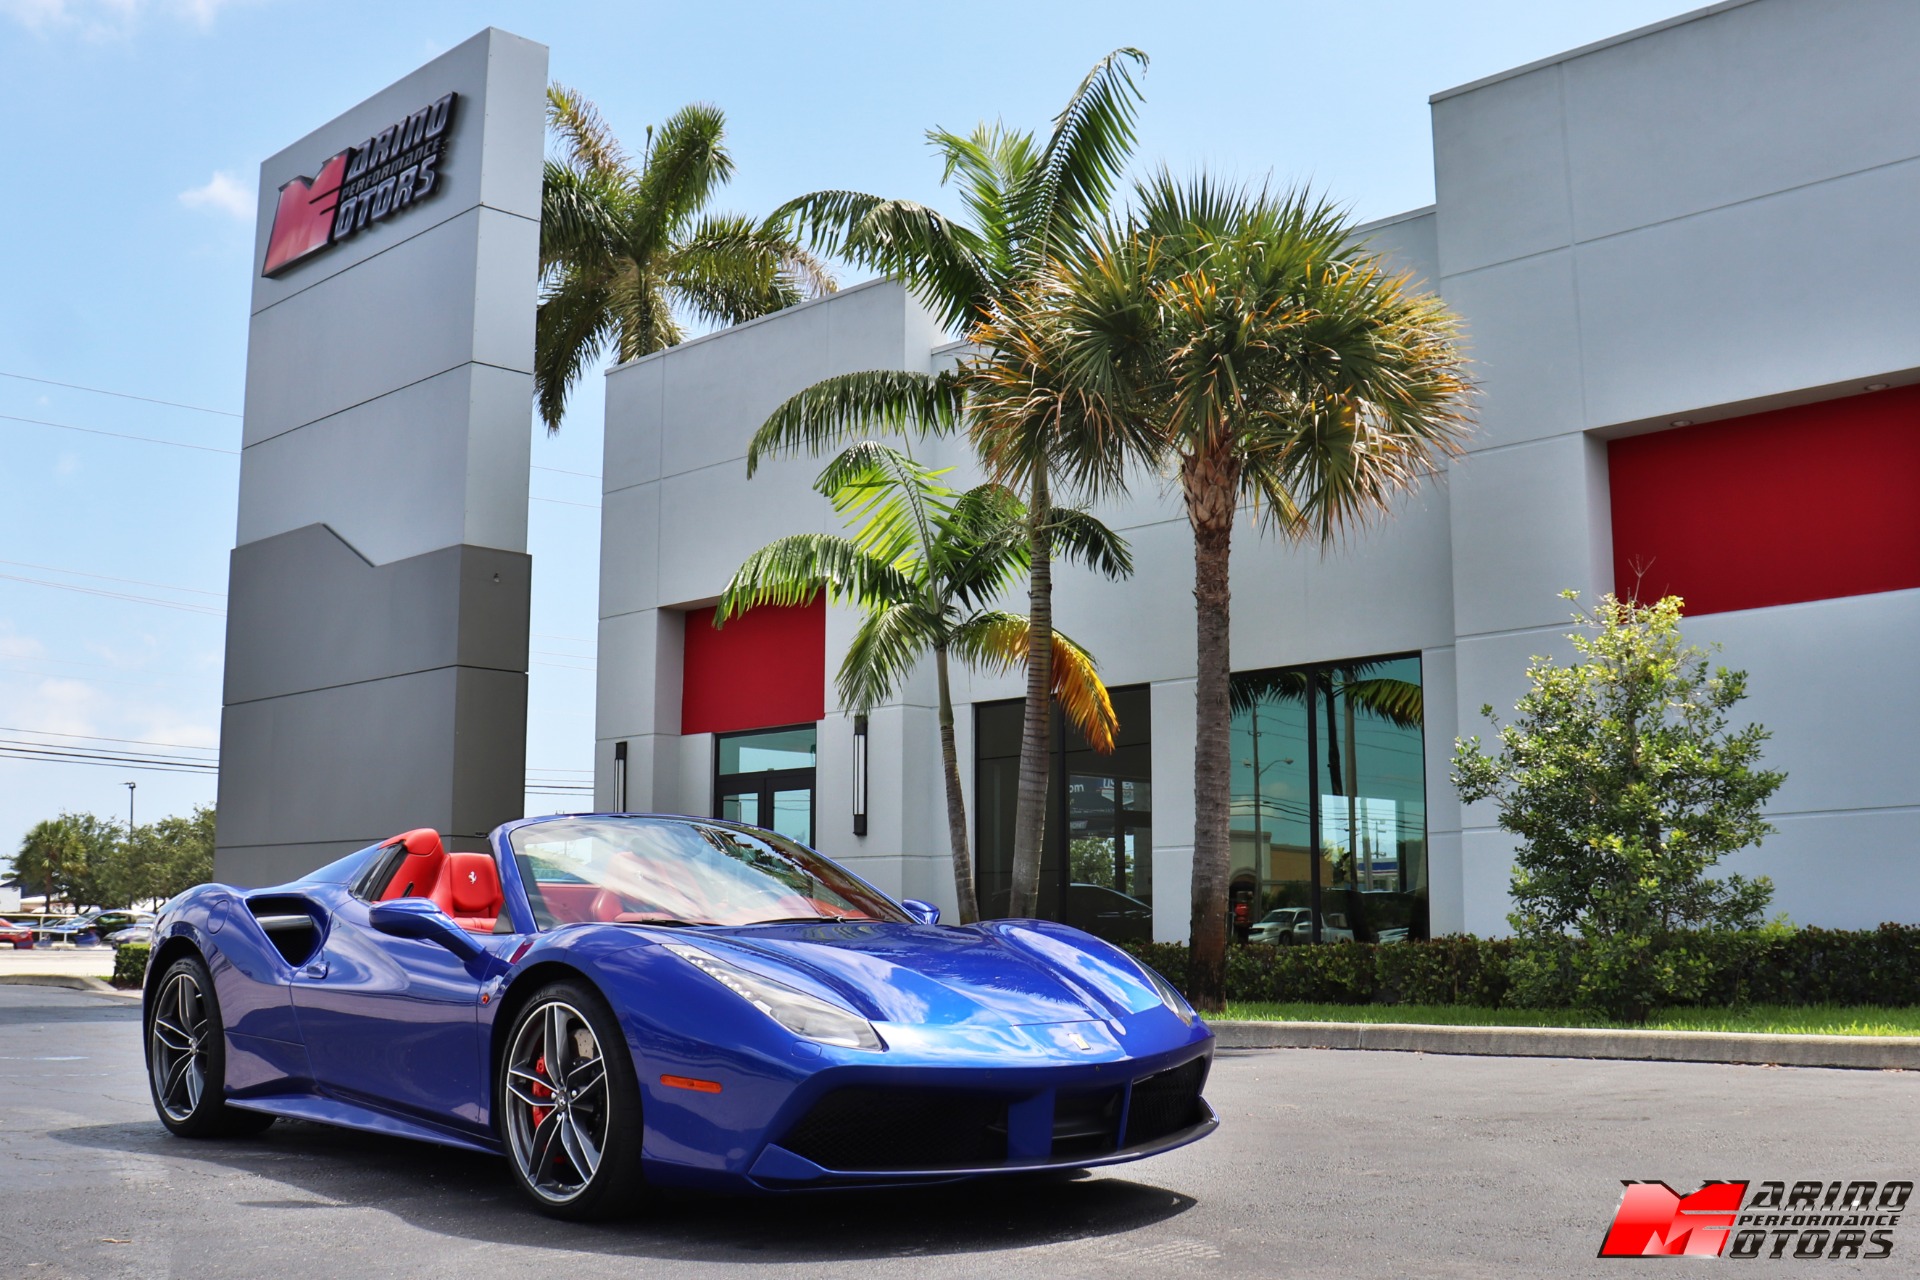 Used Ferrari dealership West Palm Beach FL